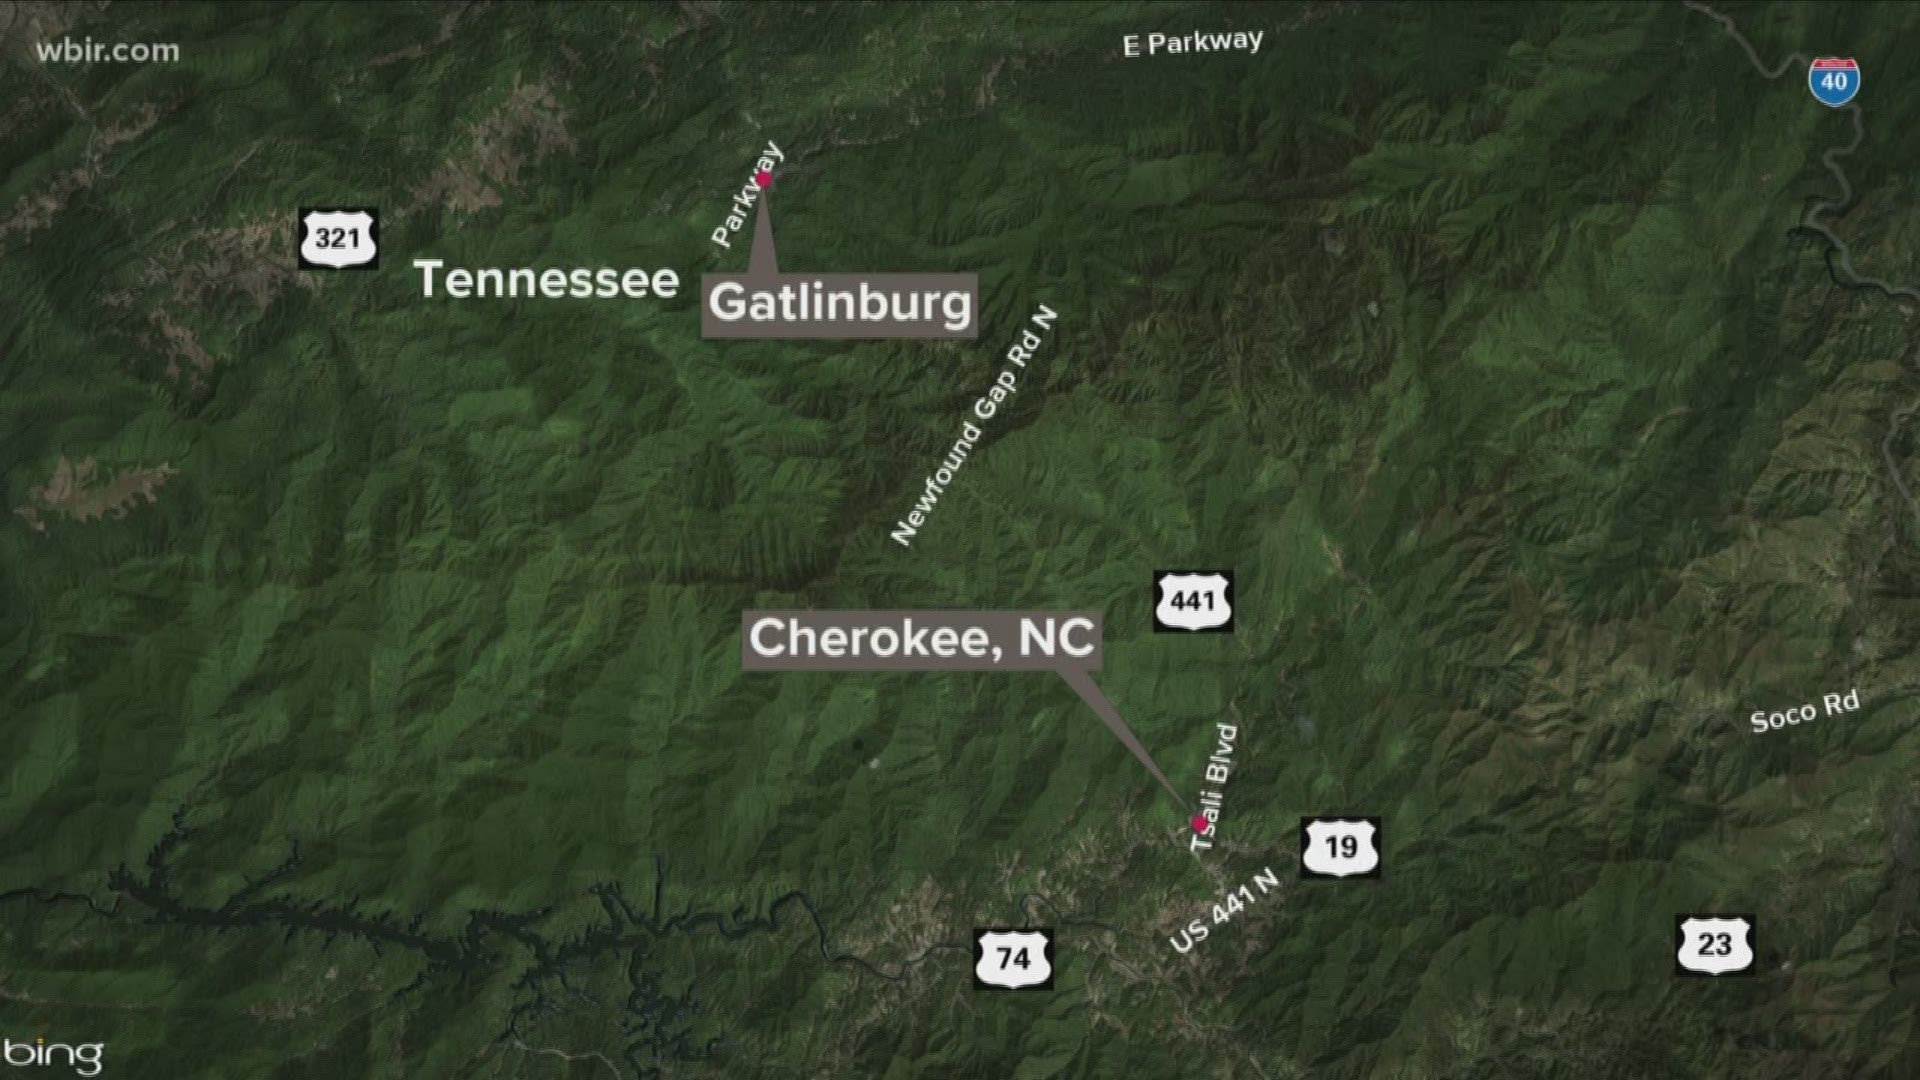 Great Smoky Mountains National Park said the closure was between Gatlinburg and Cherokee, North Carolina.